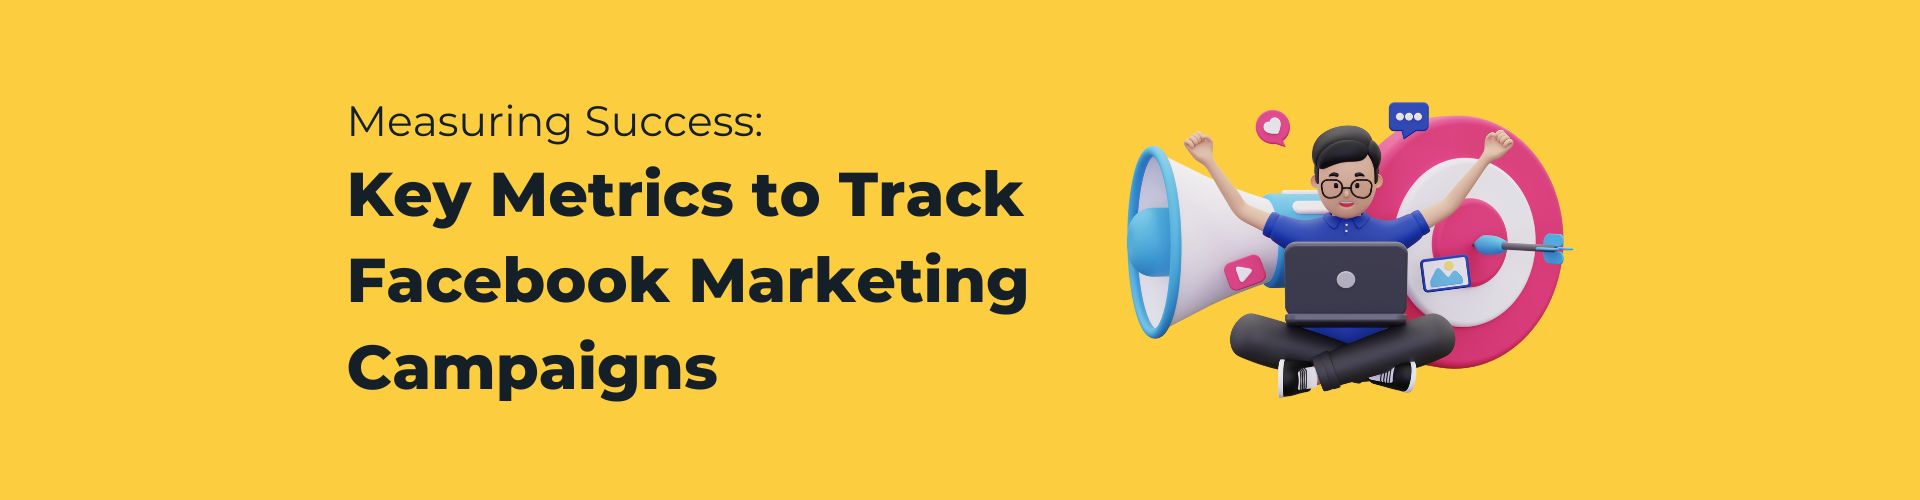 Measuring Success Key Metrics to Track Facebook Marketing Campaigns